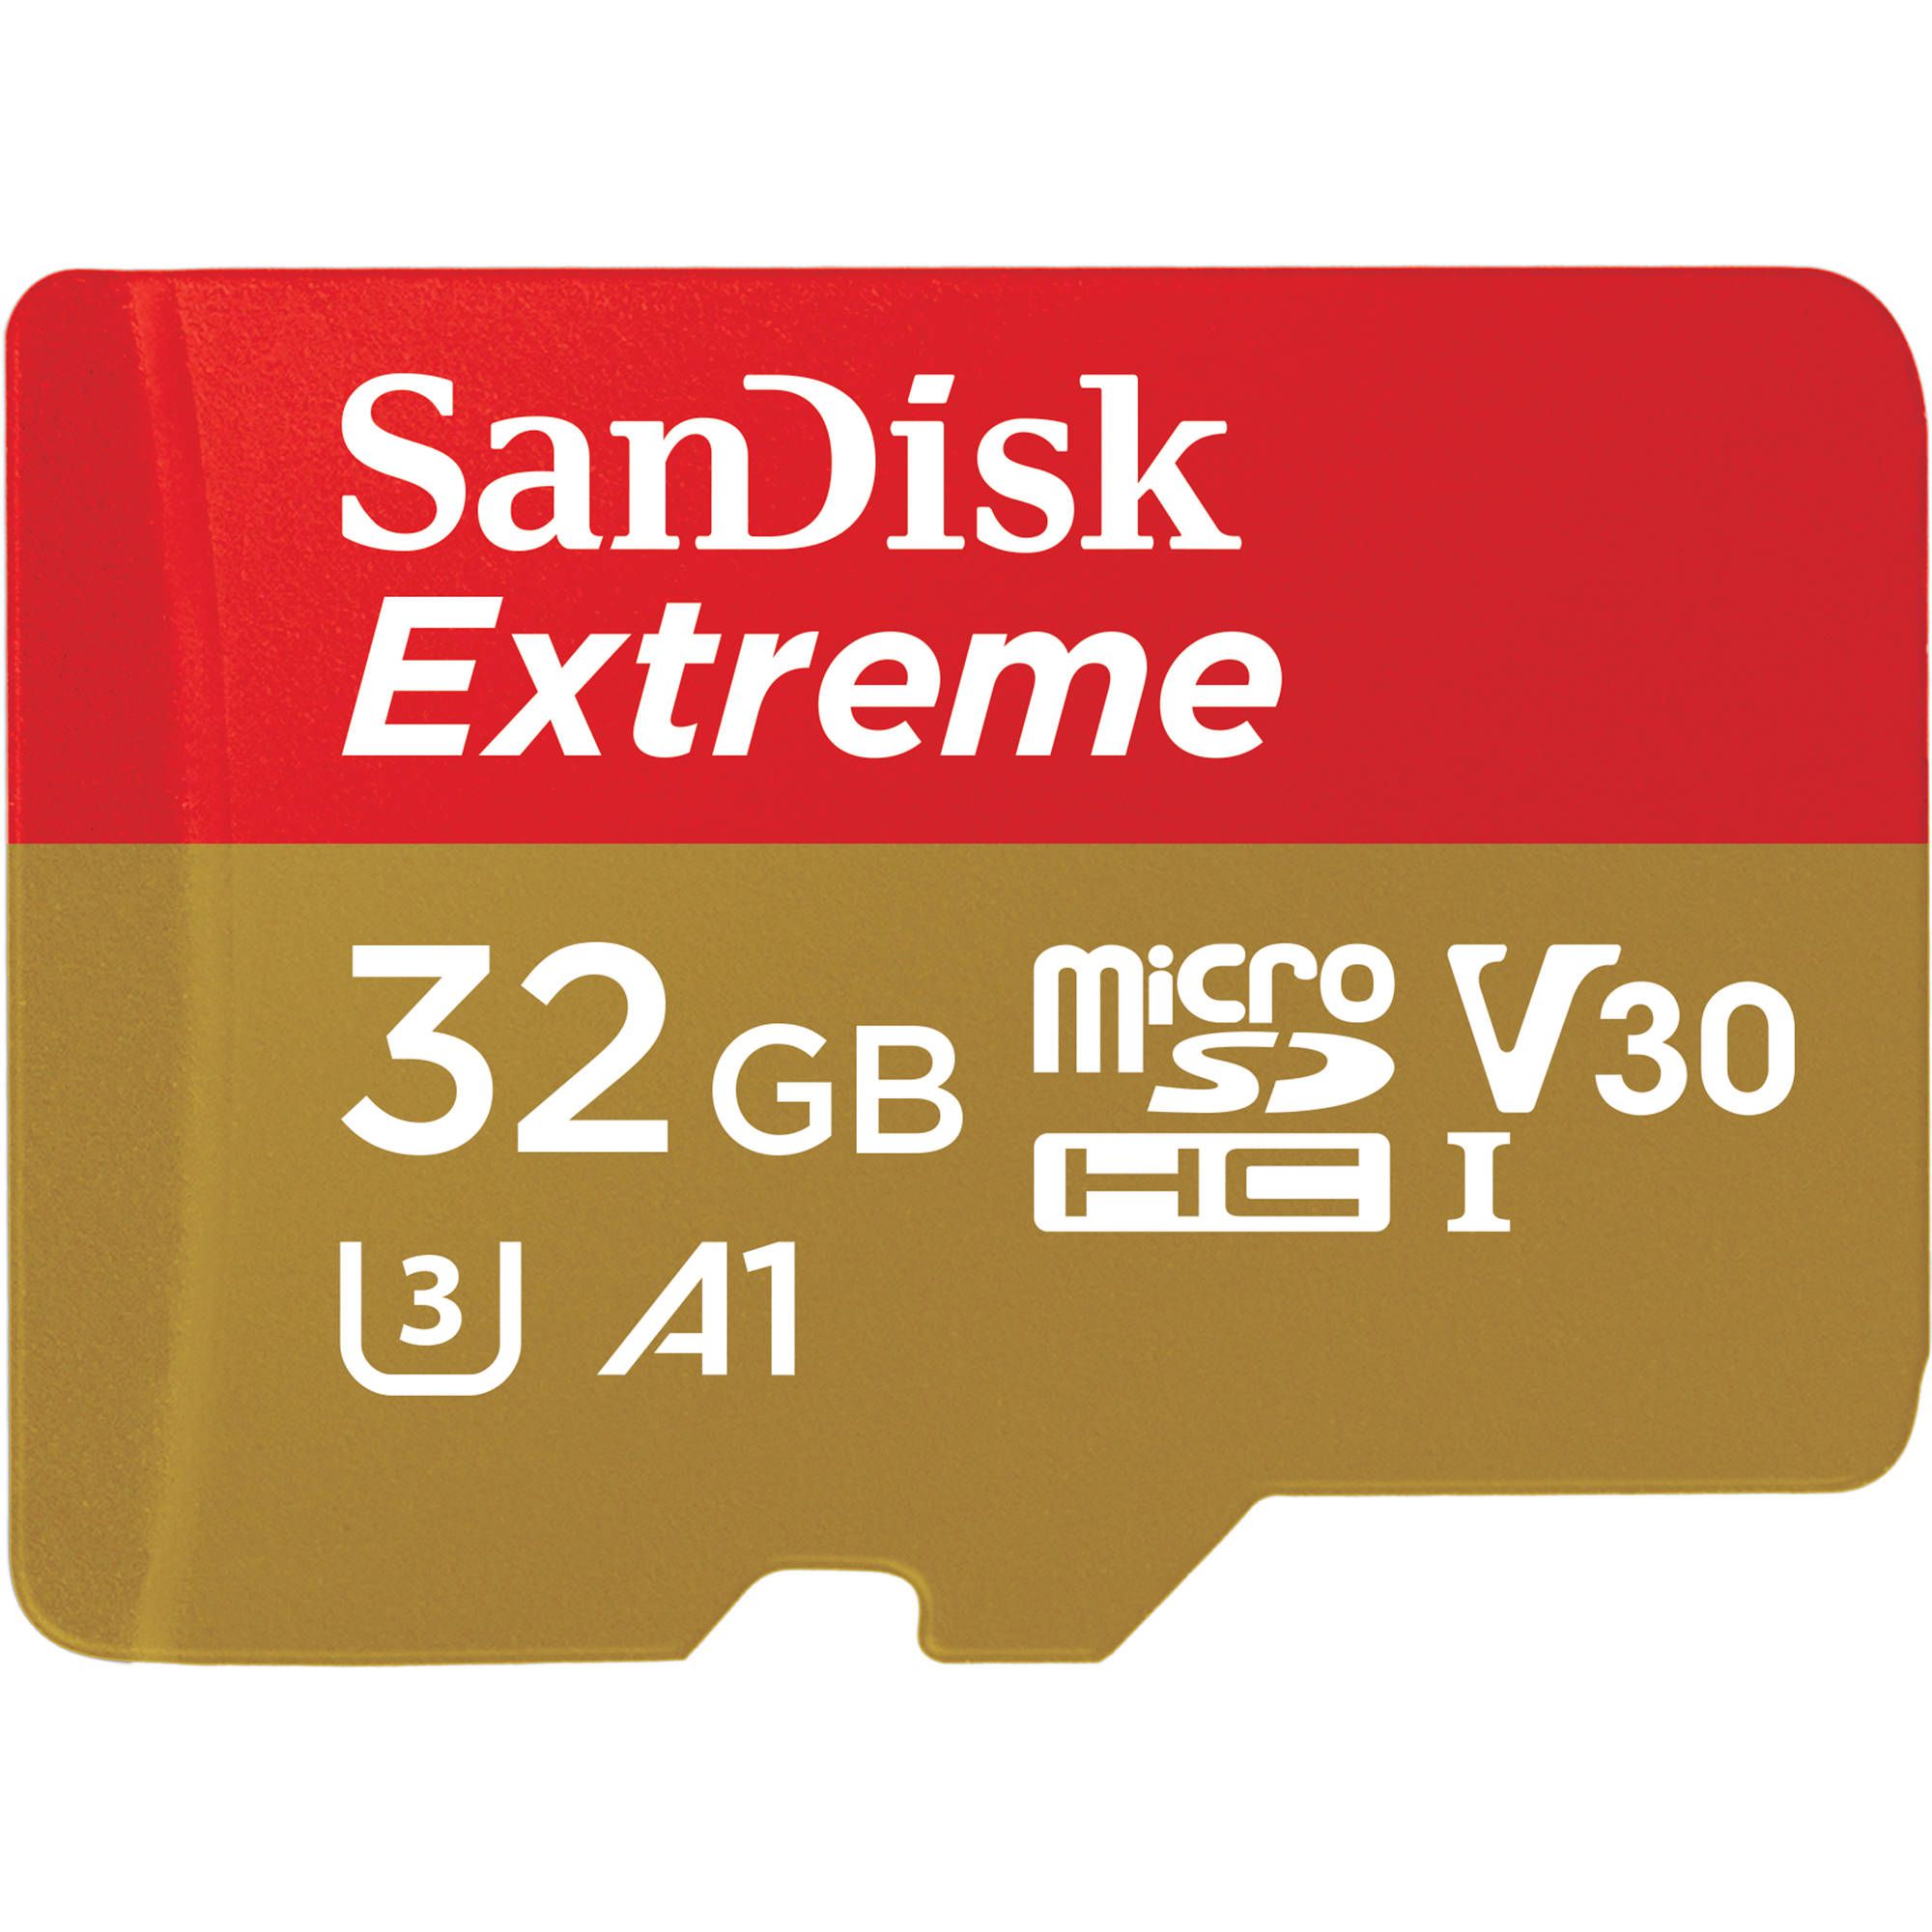 Sandisk Extreme memory card 32 GB MicroSDHC Class 10 UHS-I_3